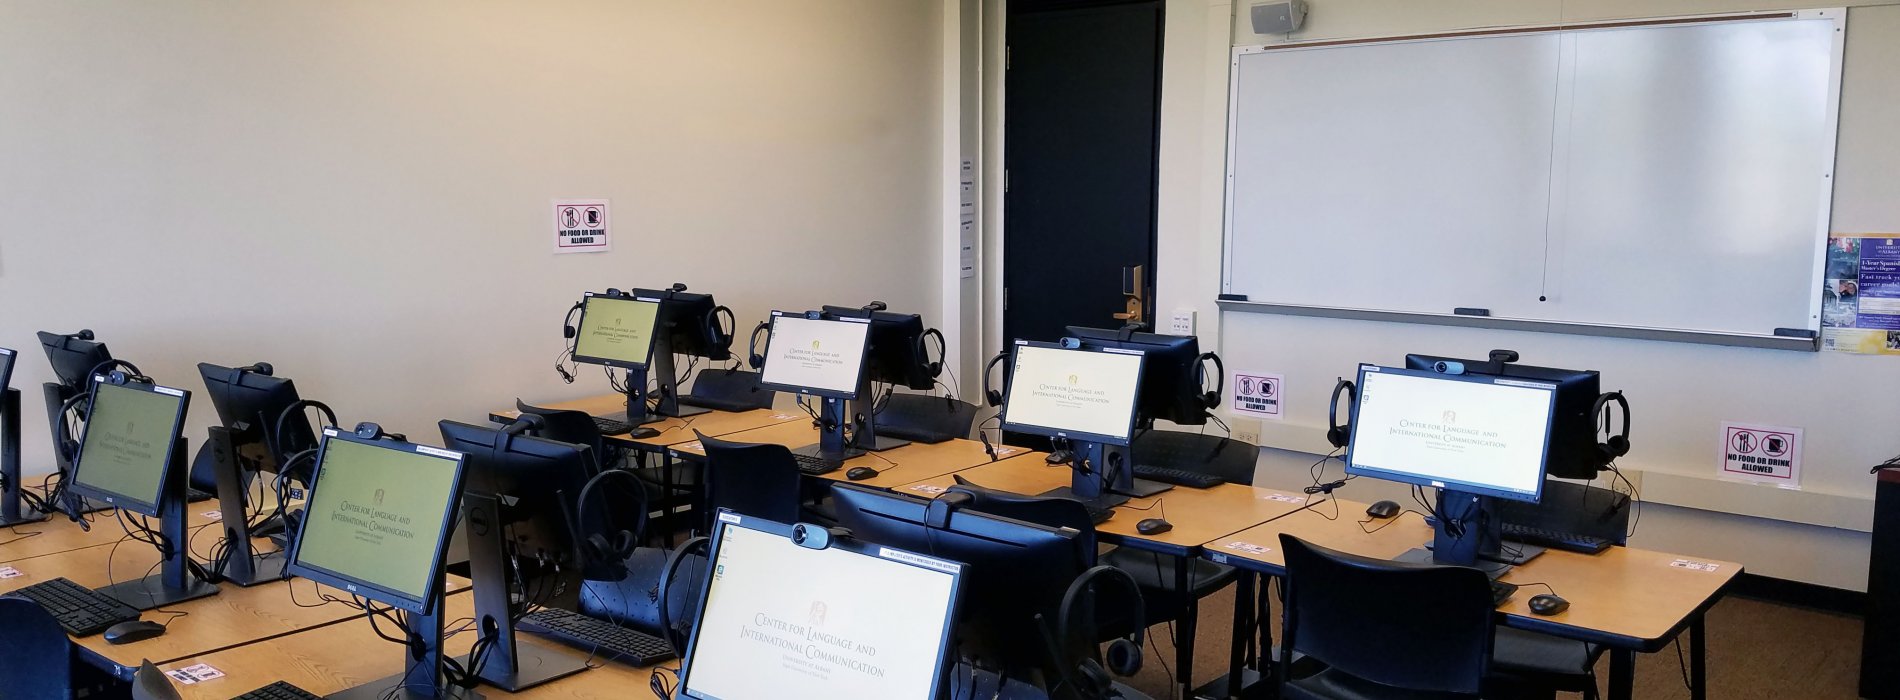 Language laboratory with computers turned on.